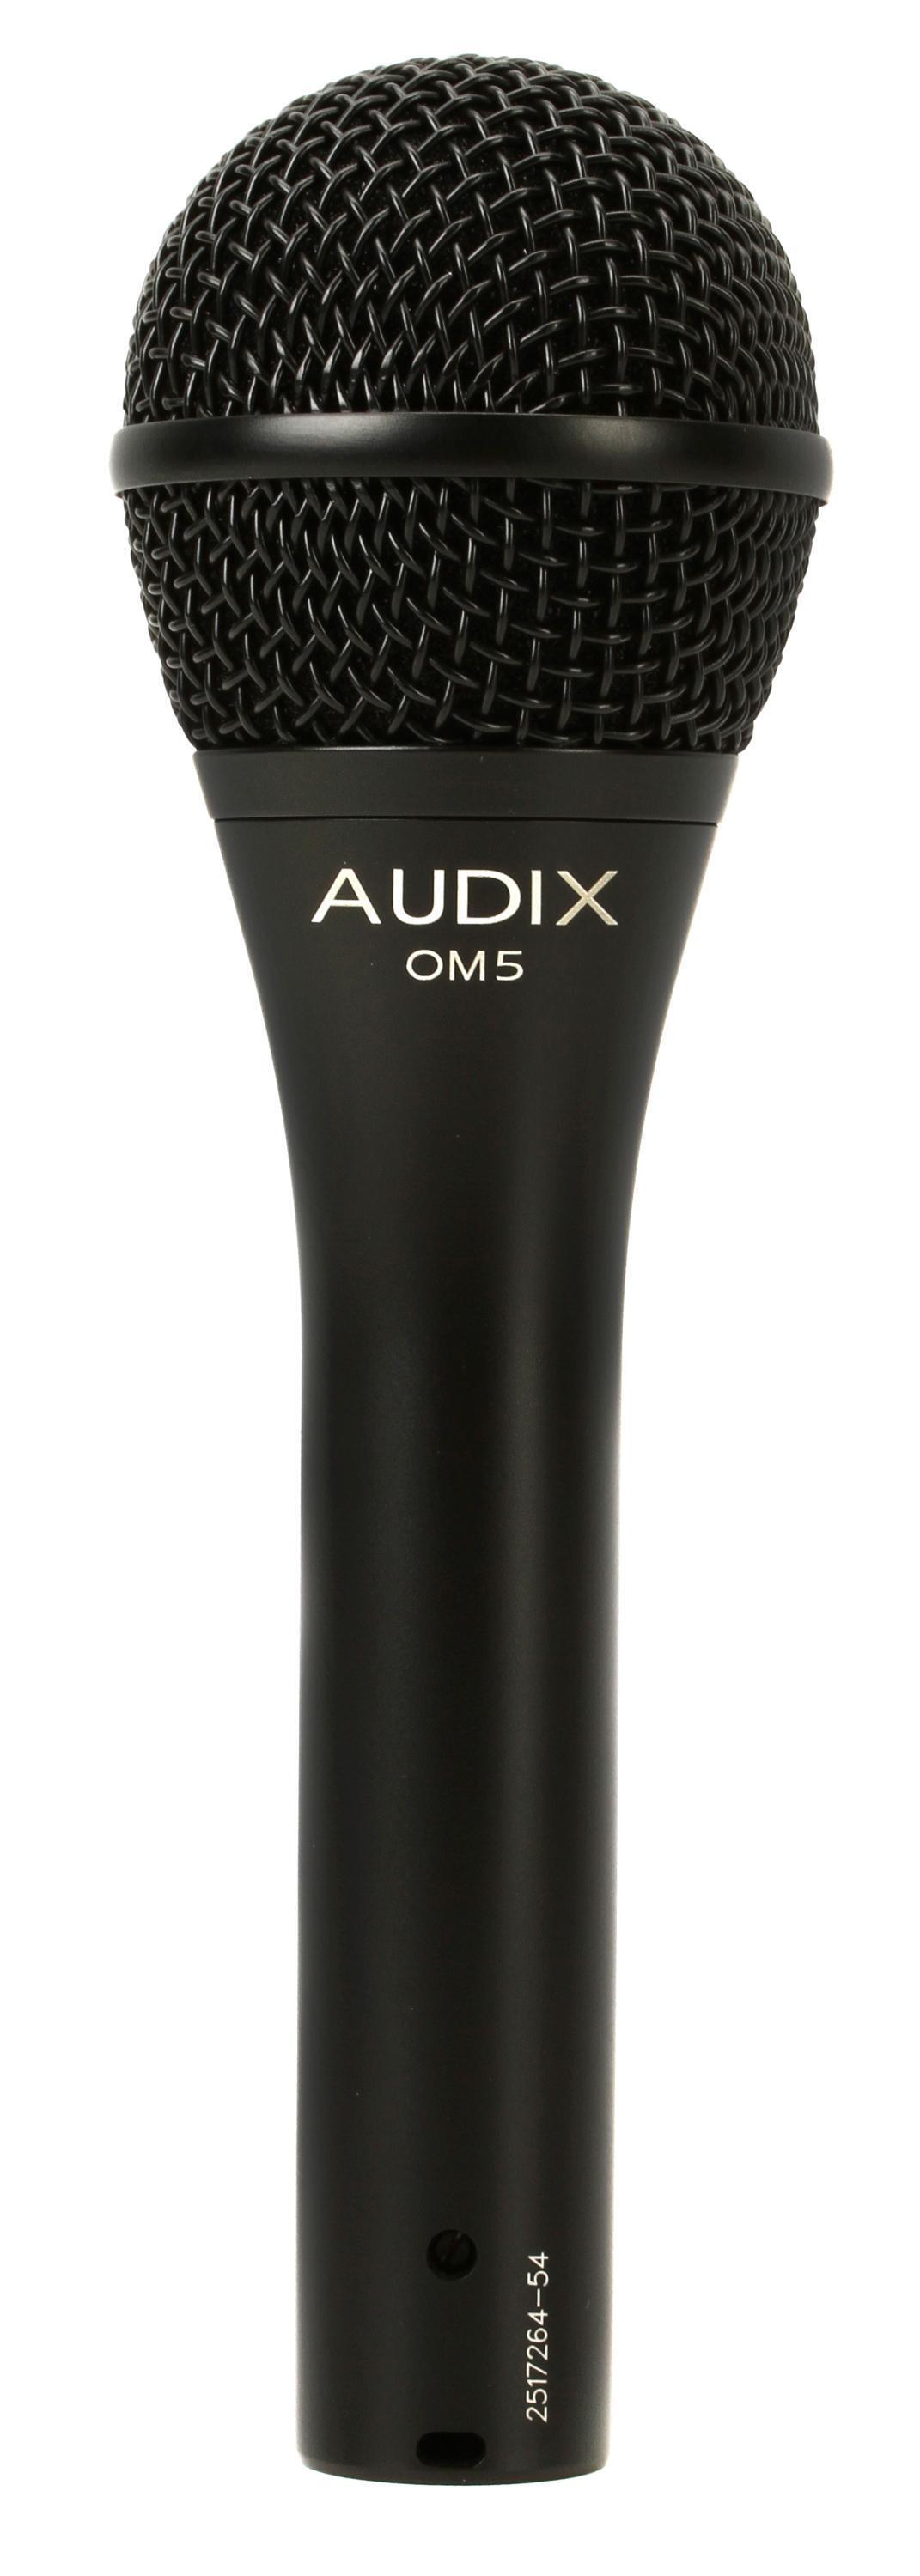 Bundled Item: Audix OM5 Hypercardioid Dynamic Vocal Microphone